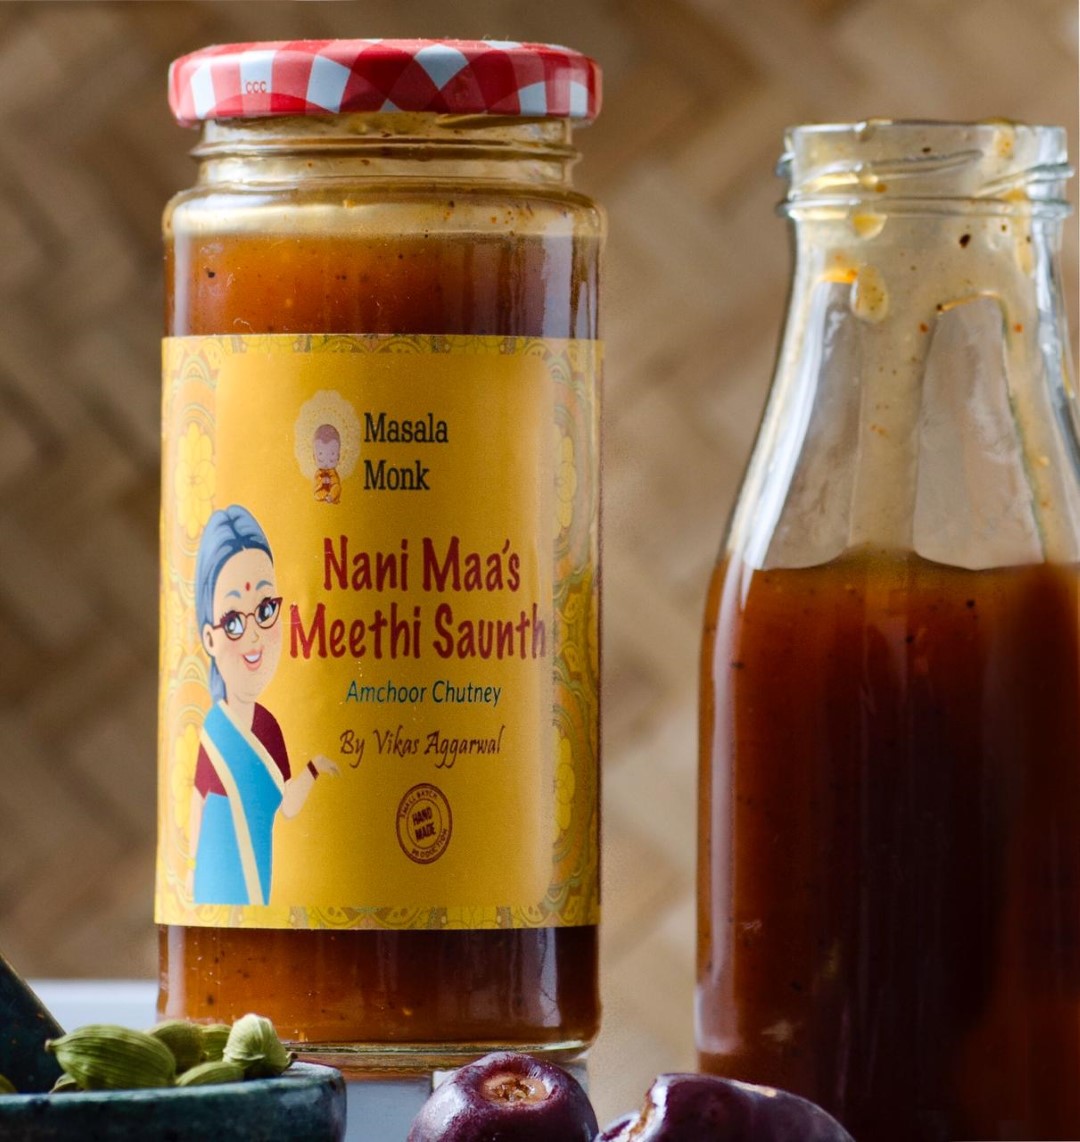 Nani Maa's Meethi Saunth by Masala Monk